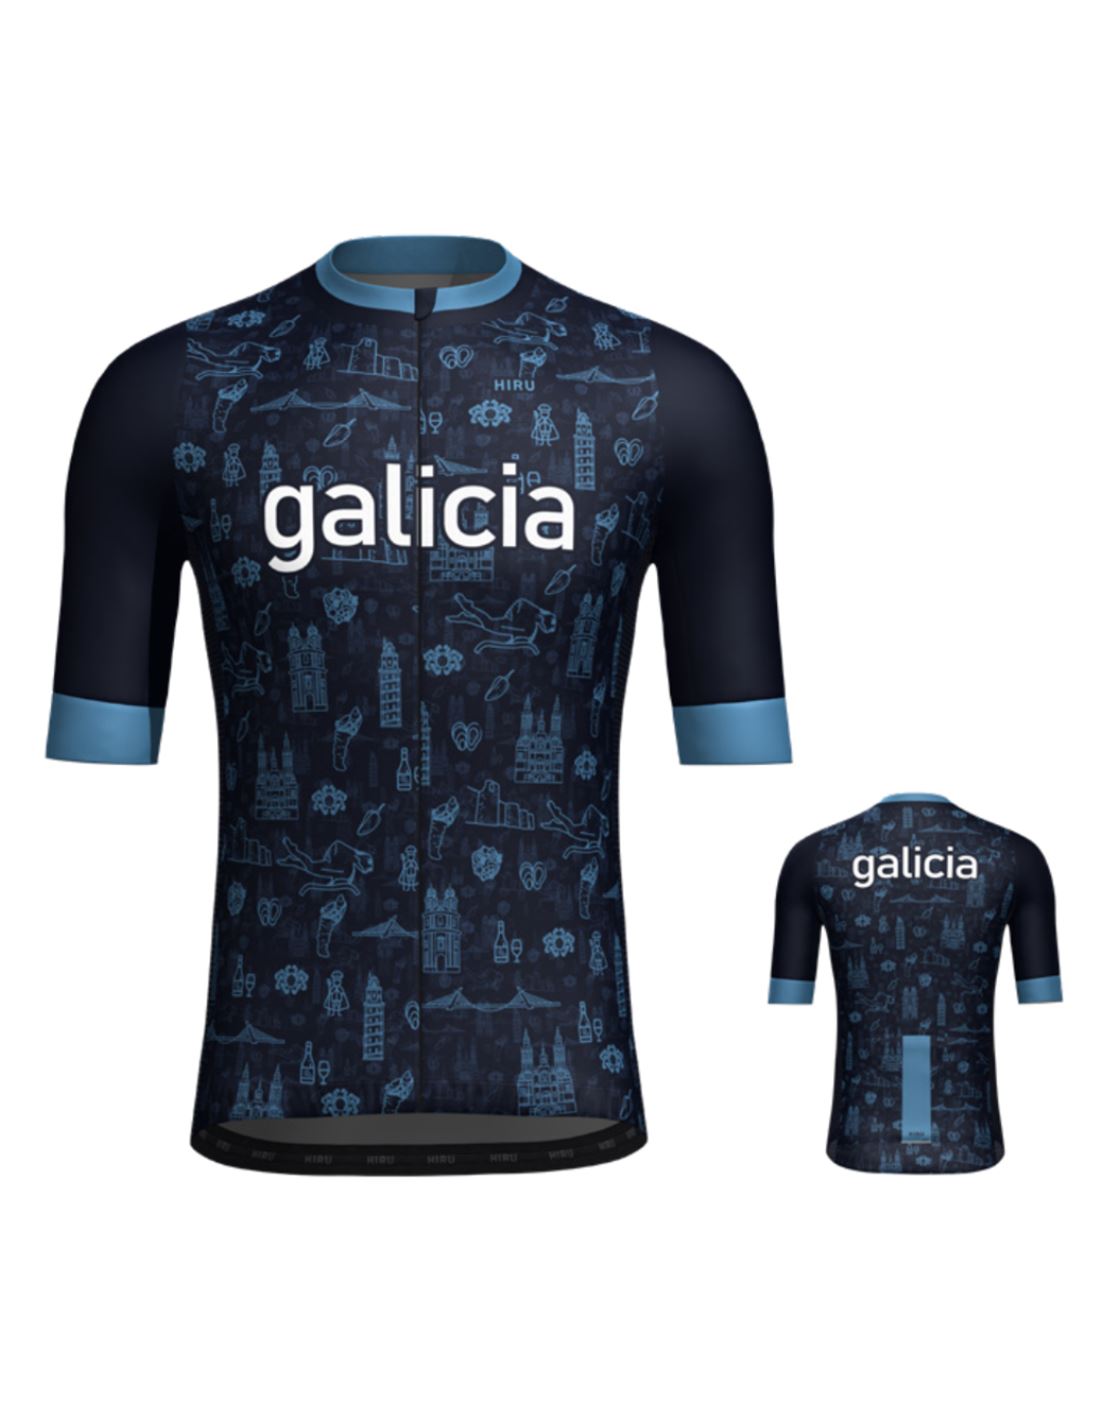 MAILLOT GALICIA 2022 - Xacobeo. Mejor - Tiendas LaFuga Cycling